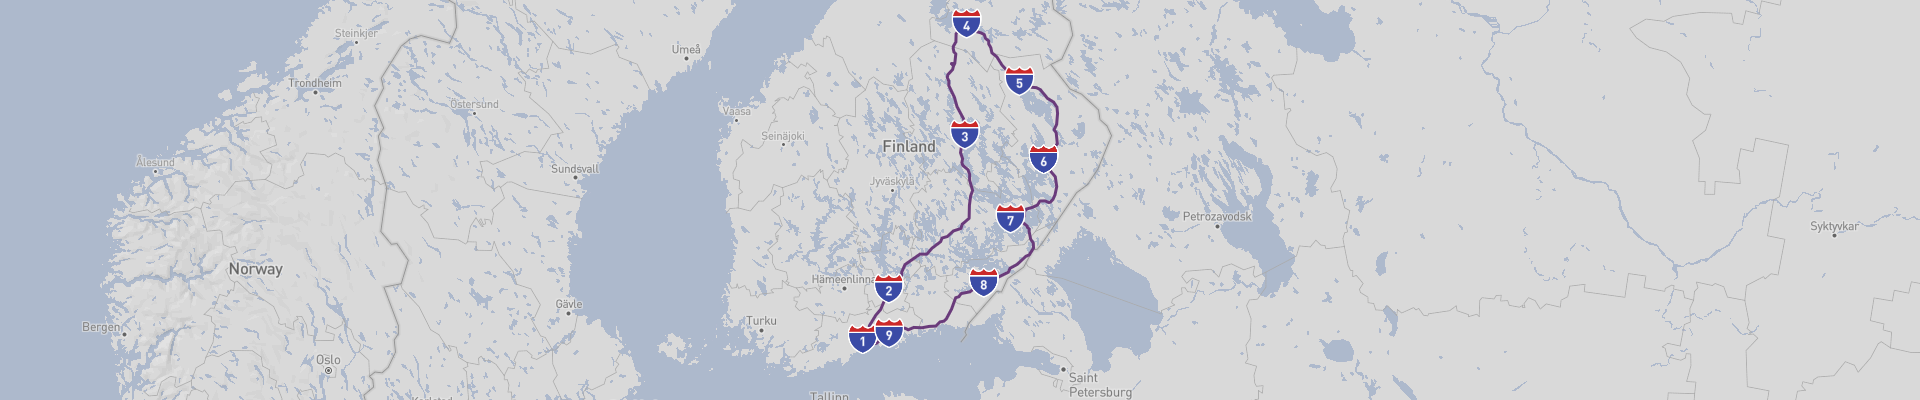 Itinéraire Eastern Finland 